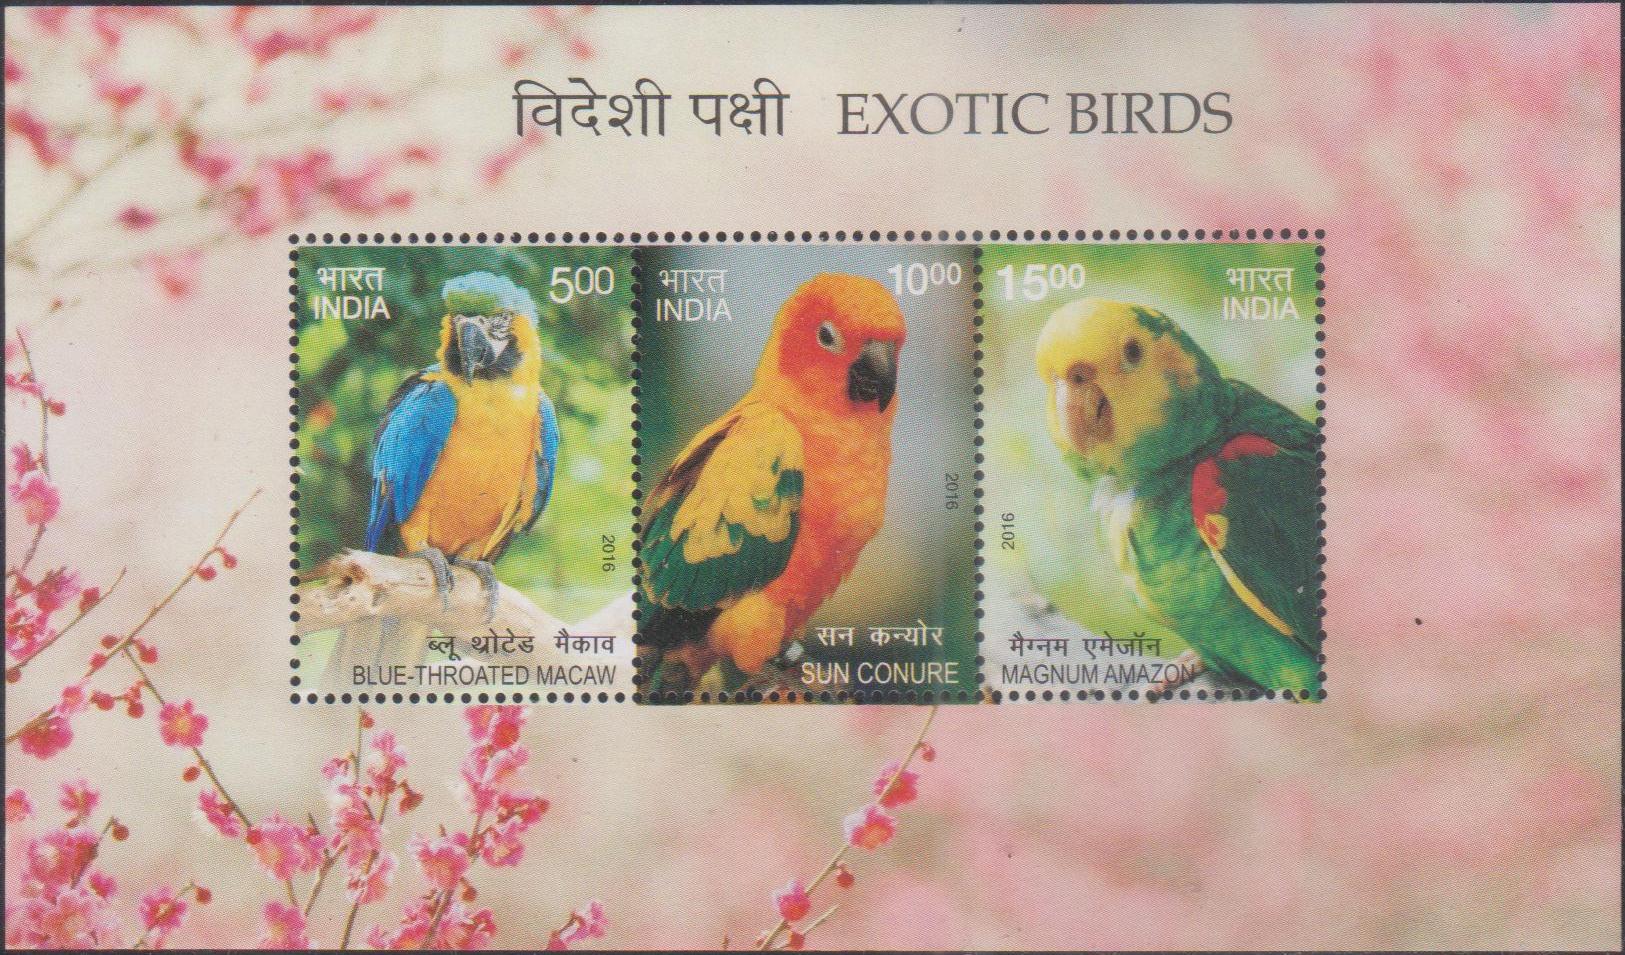 Exotic Birds of India 2016